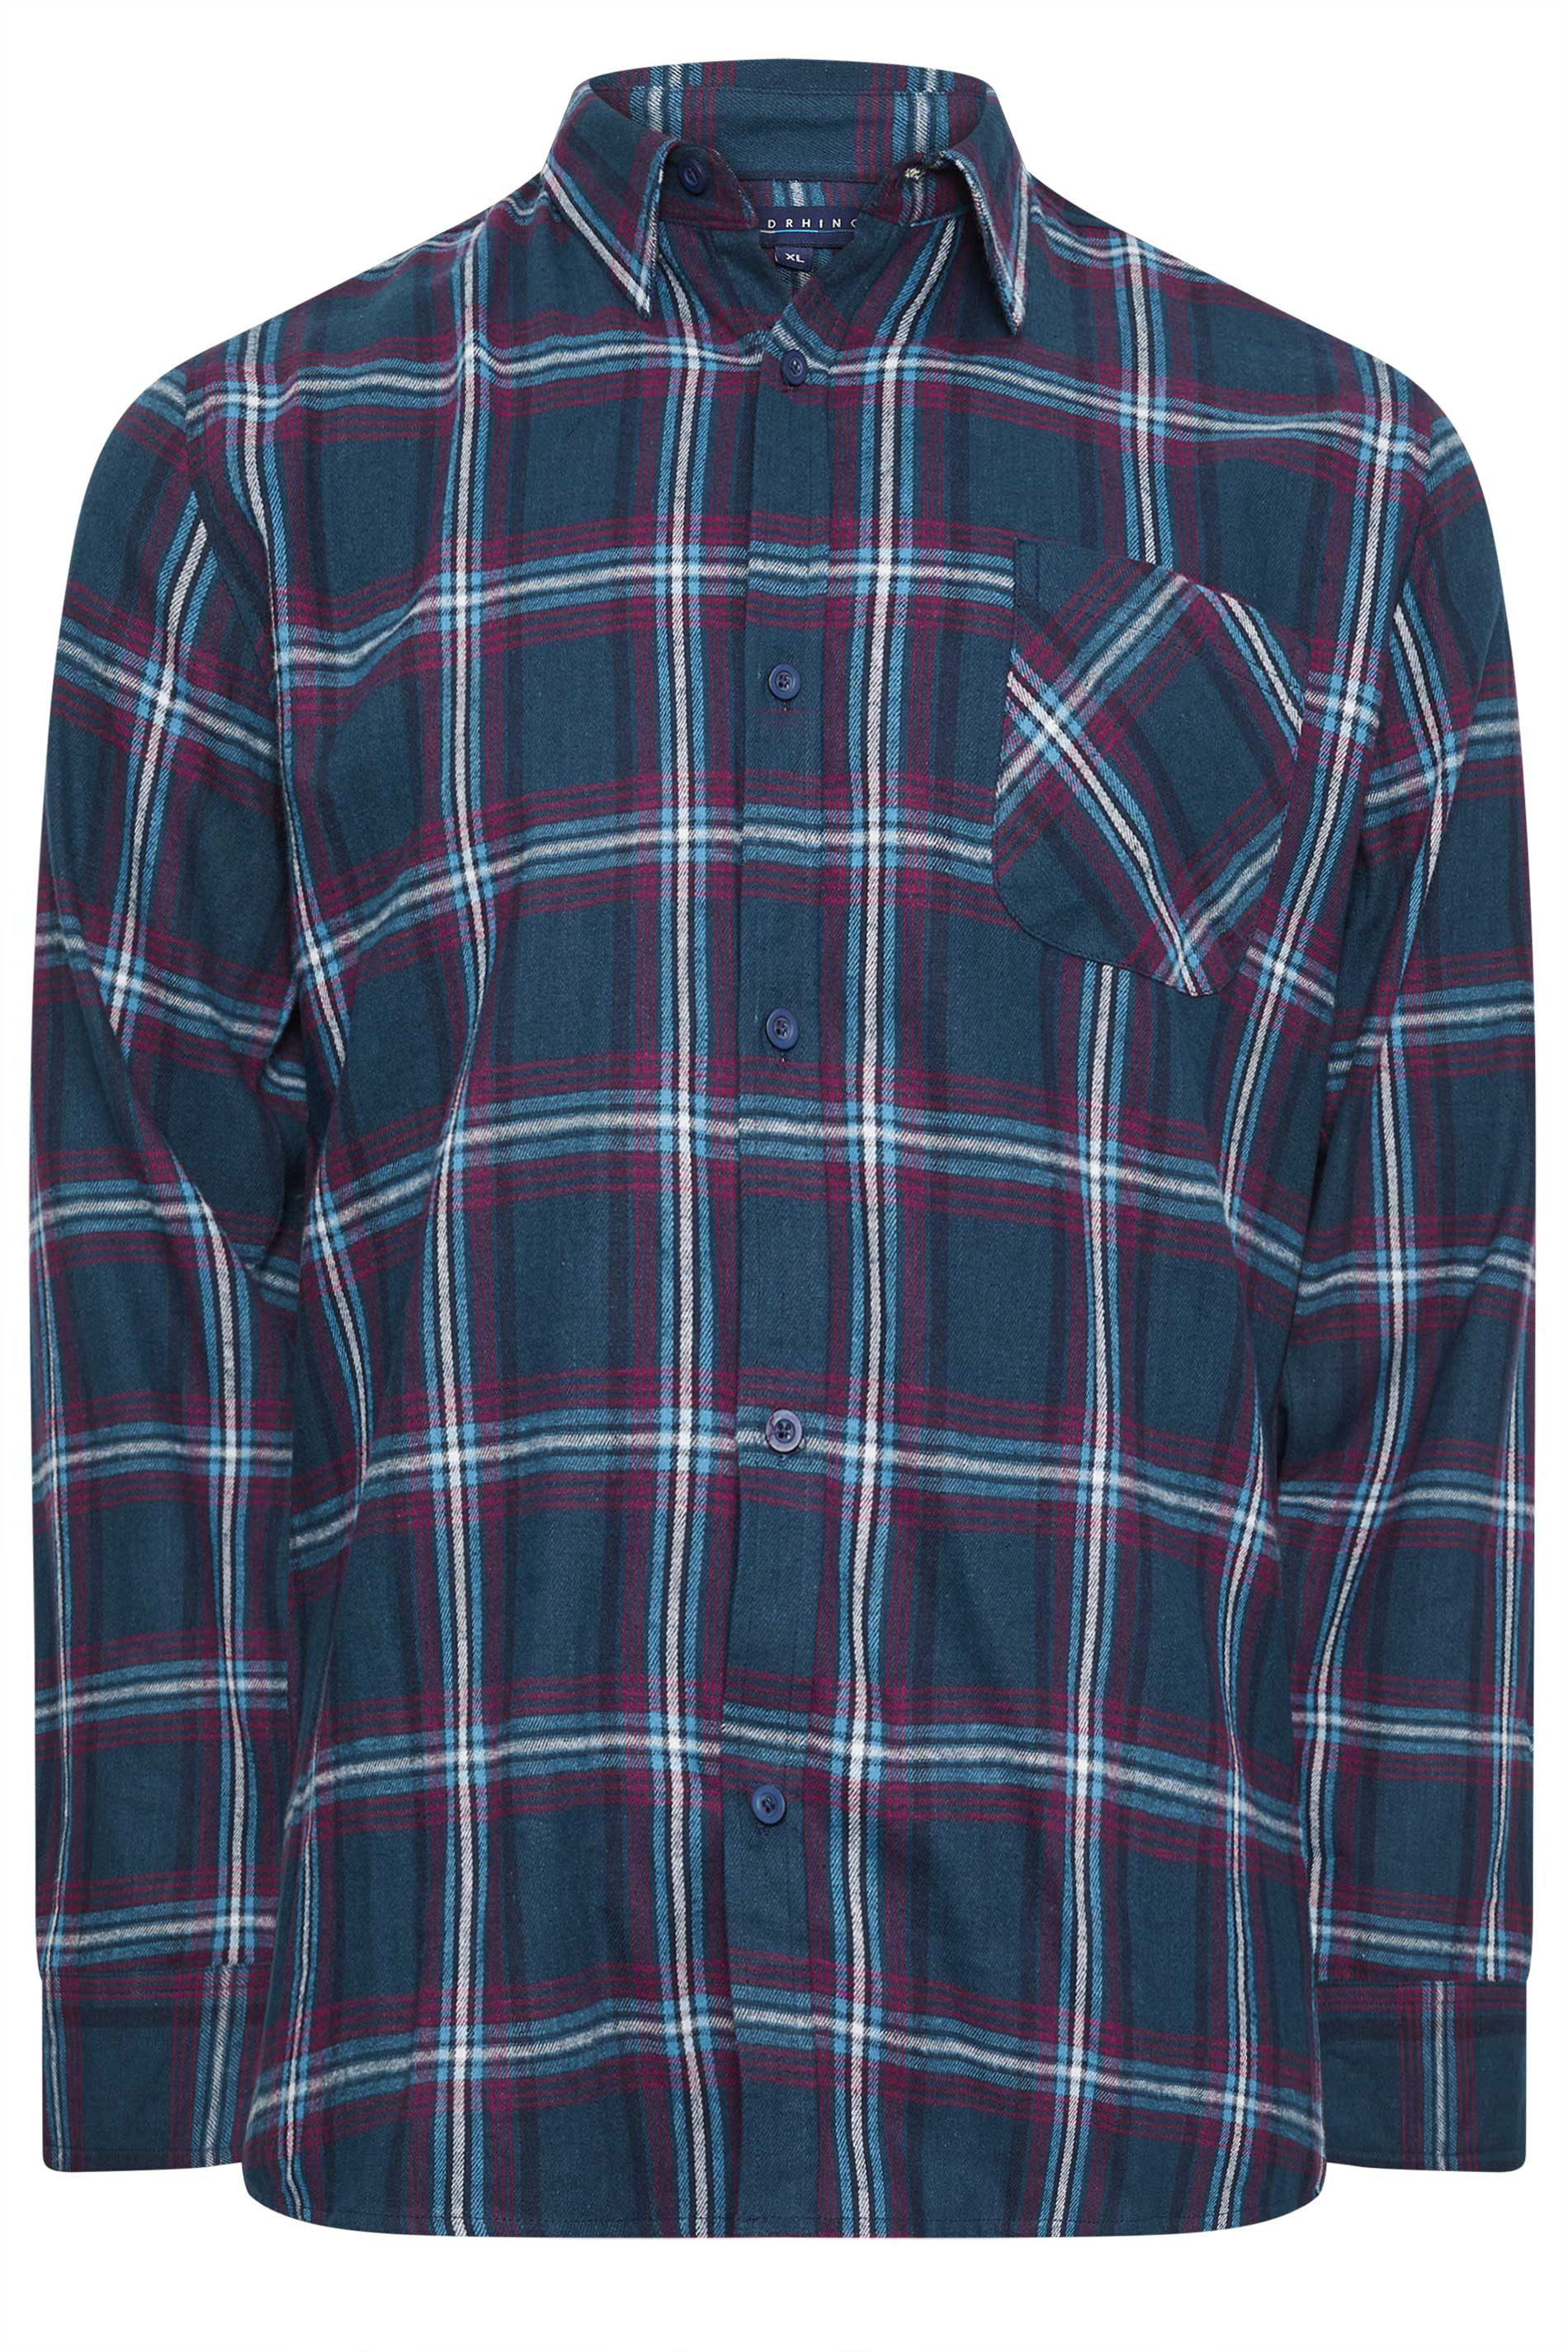 BadRhino Big & Tall Navy Blue Brushed Cotton Check Long Sleeve Shirt | BadRhino 3